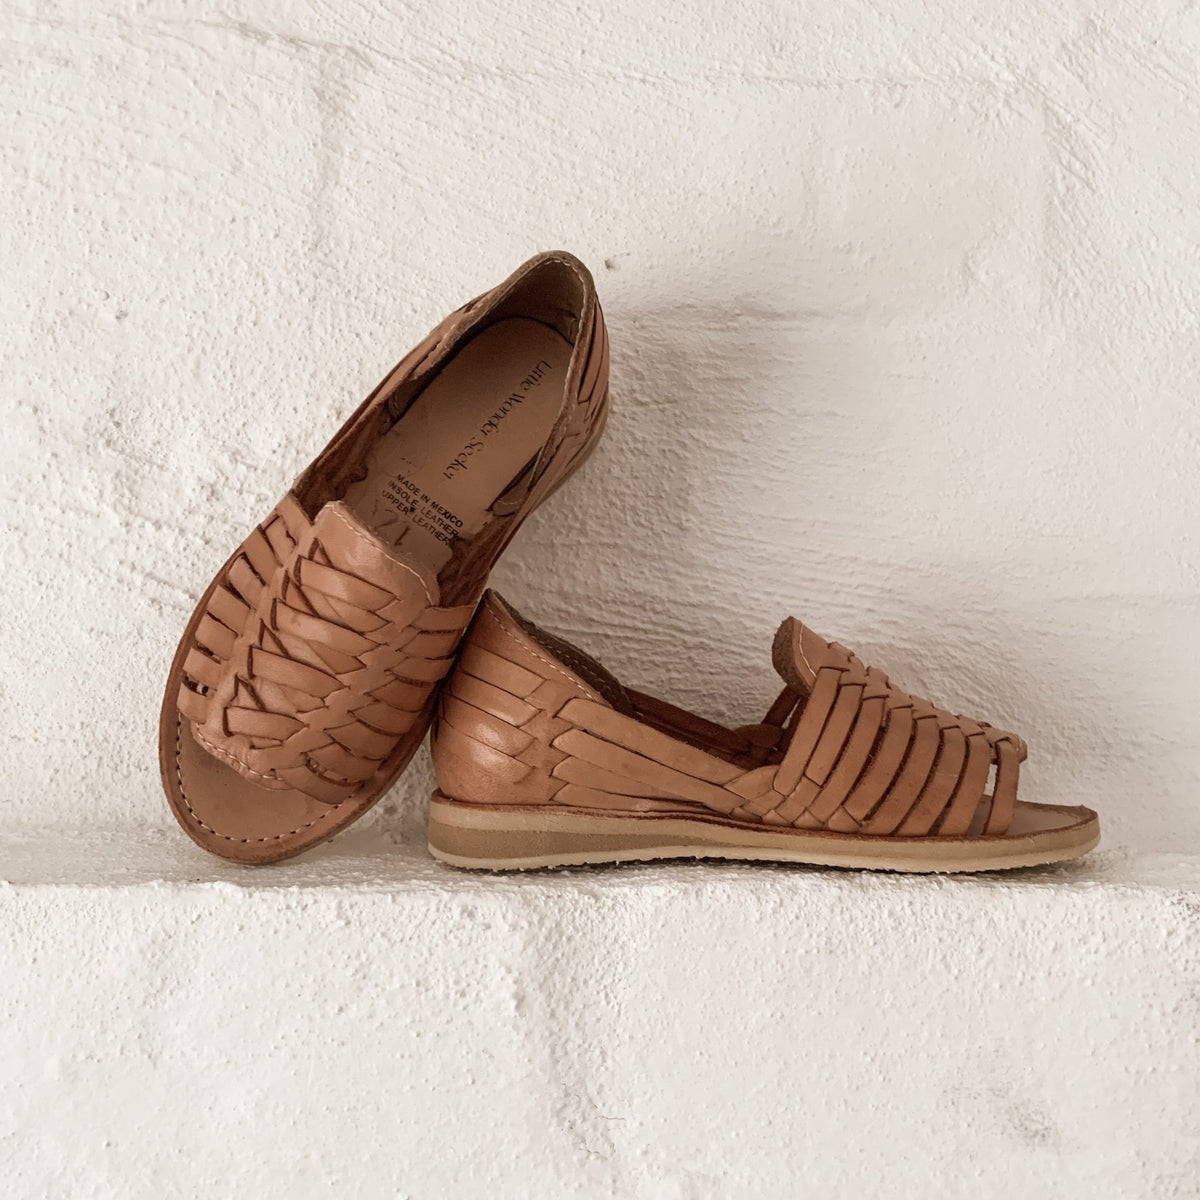 Kids Huarache Leather Sandals - Slip On Style